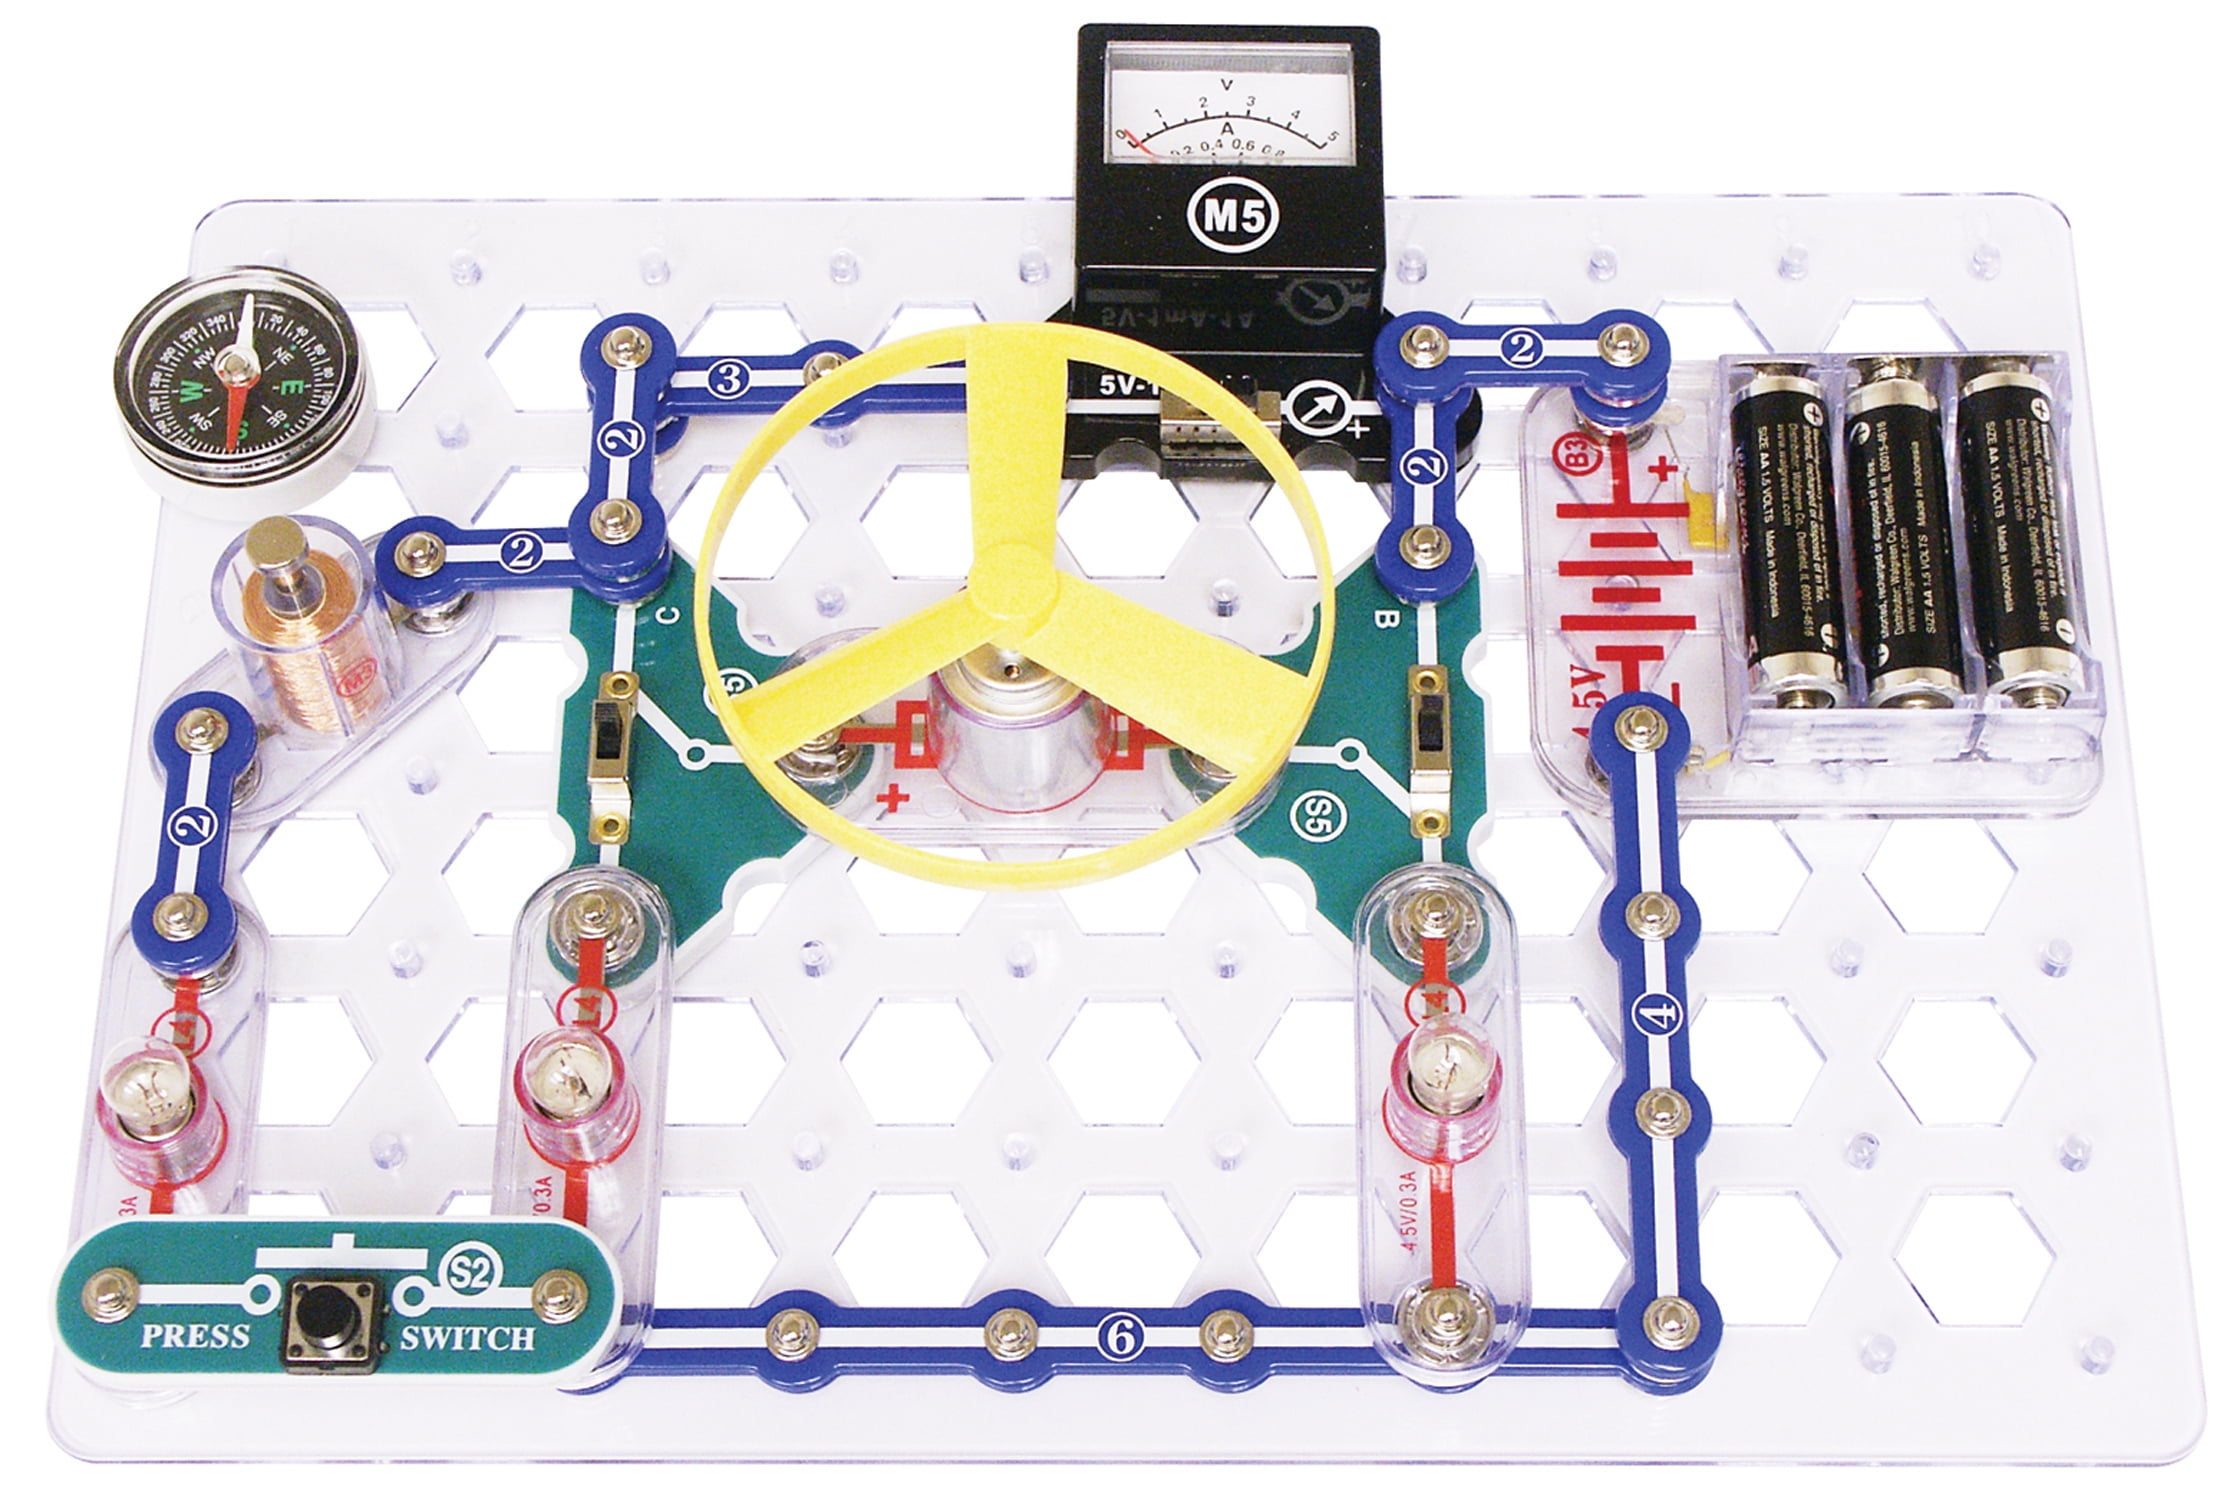 Snap Circuits Snaptricity, Electronics Exploration Kit (Stem Building),  Model#: EE-SCBE75, For Kids 8+